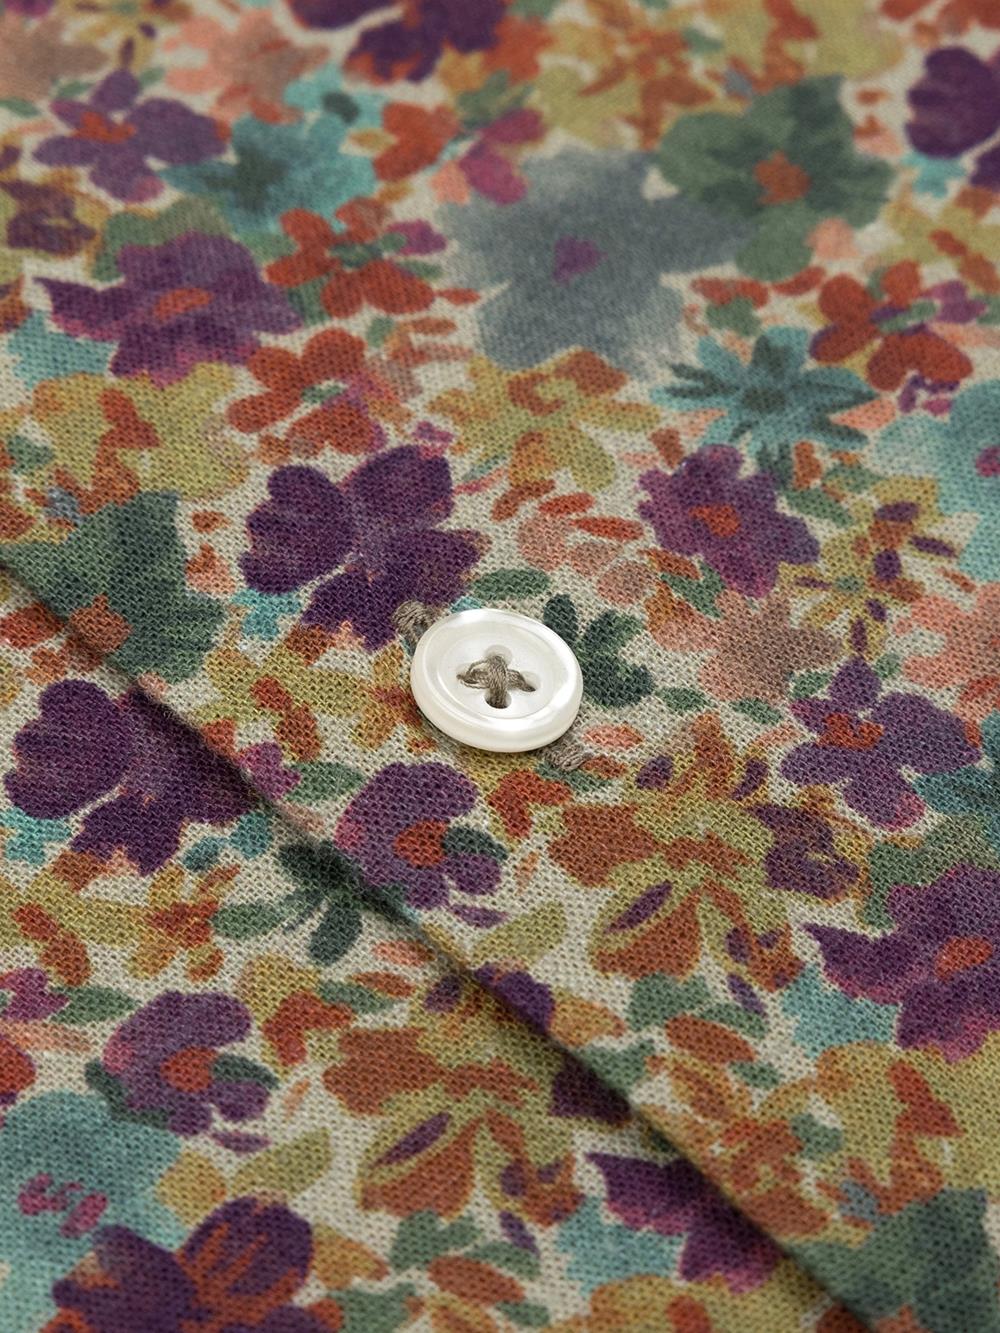 Camisa manga corta Stuart de lino con estampado floral 